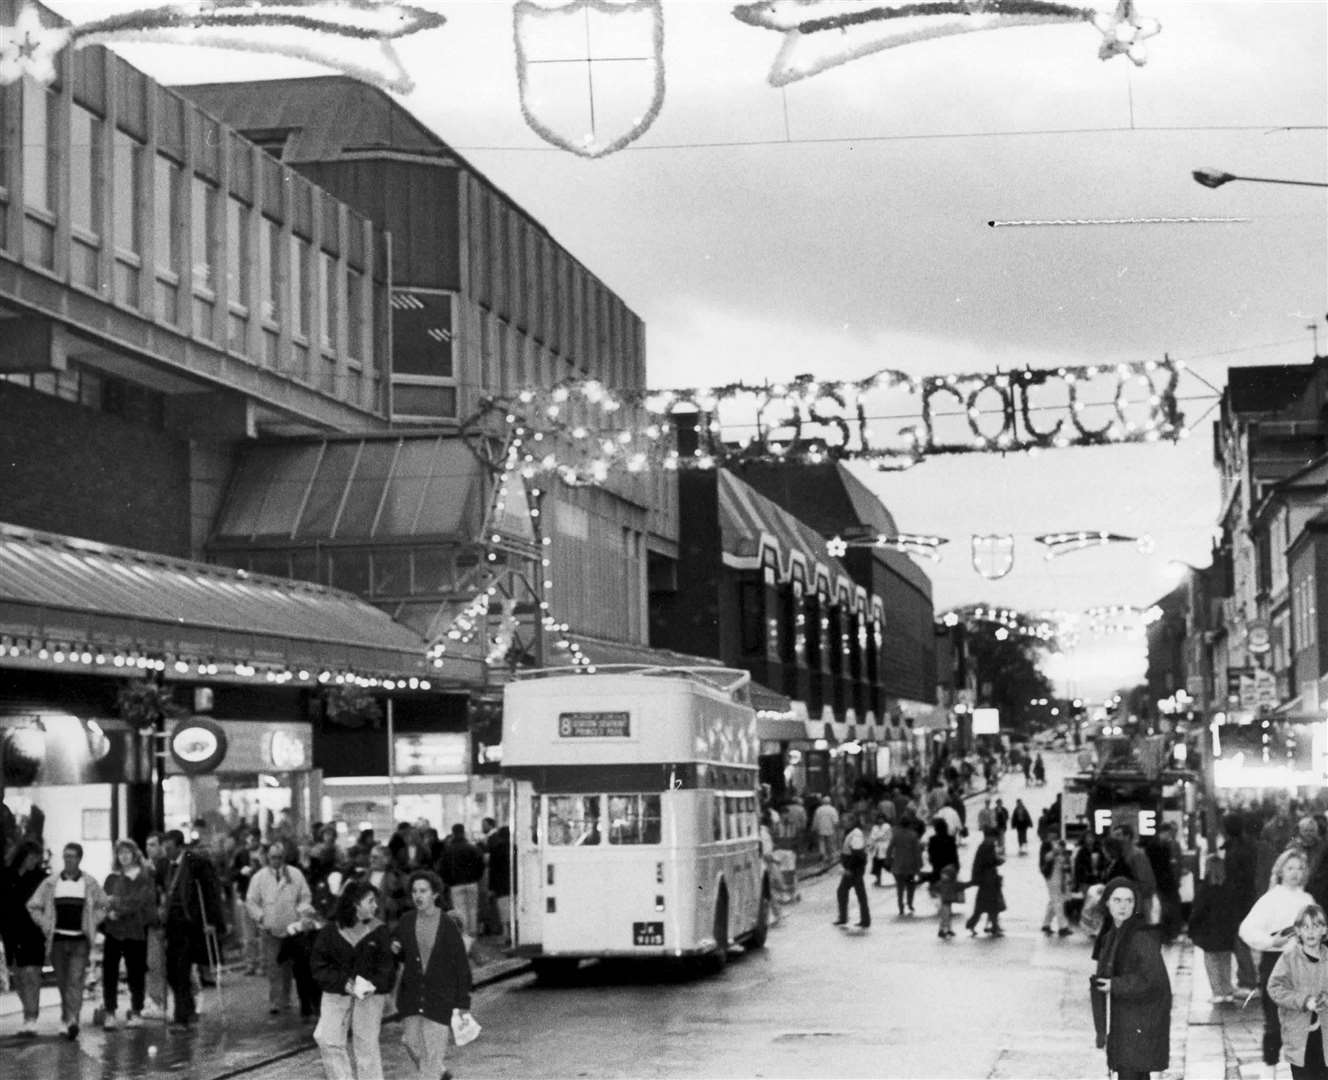 Christmas lights in Gravesend in 1990